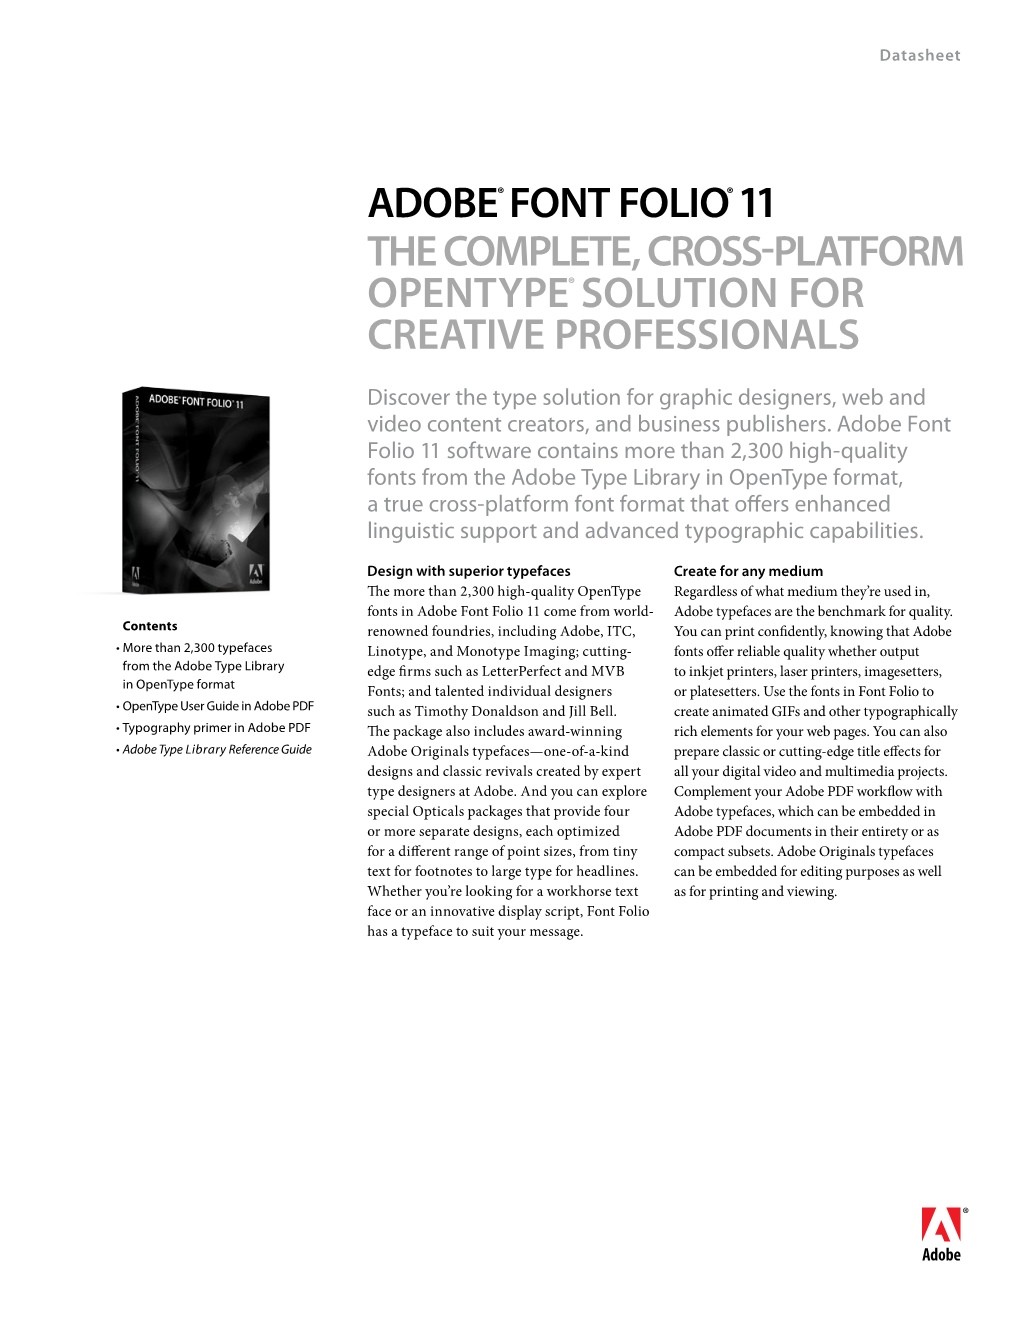 Adobe® Font Folio® 11 the Complete, Cross-Platform Opentype® Solution for Creative Professionals